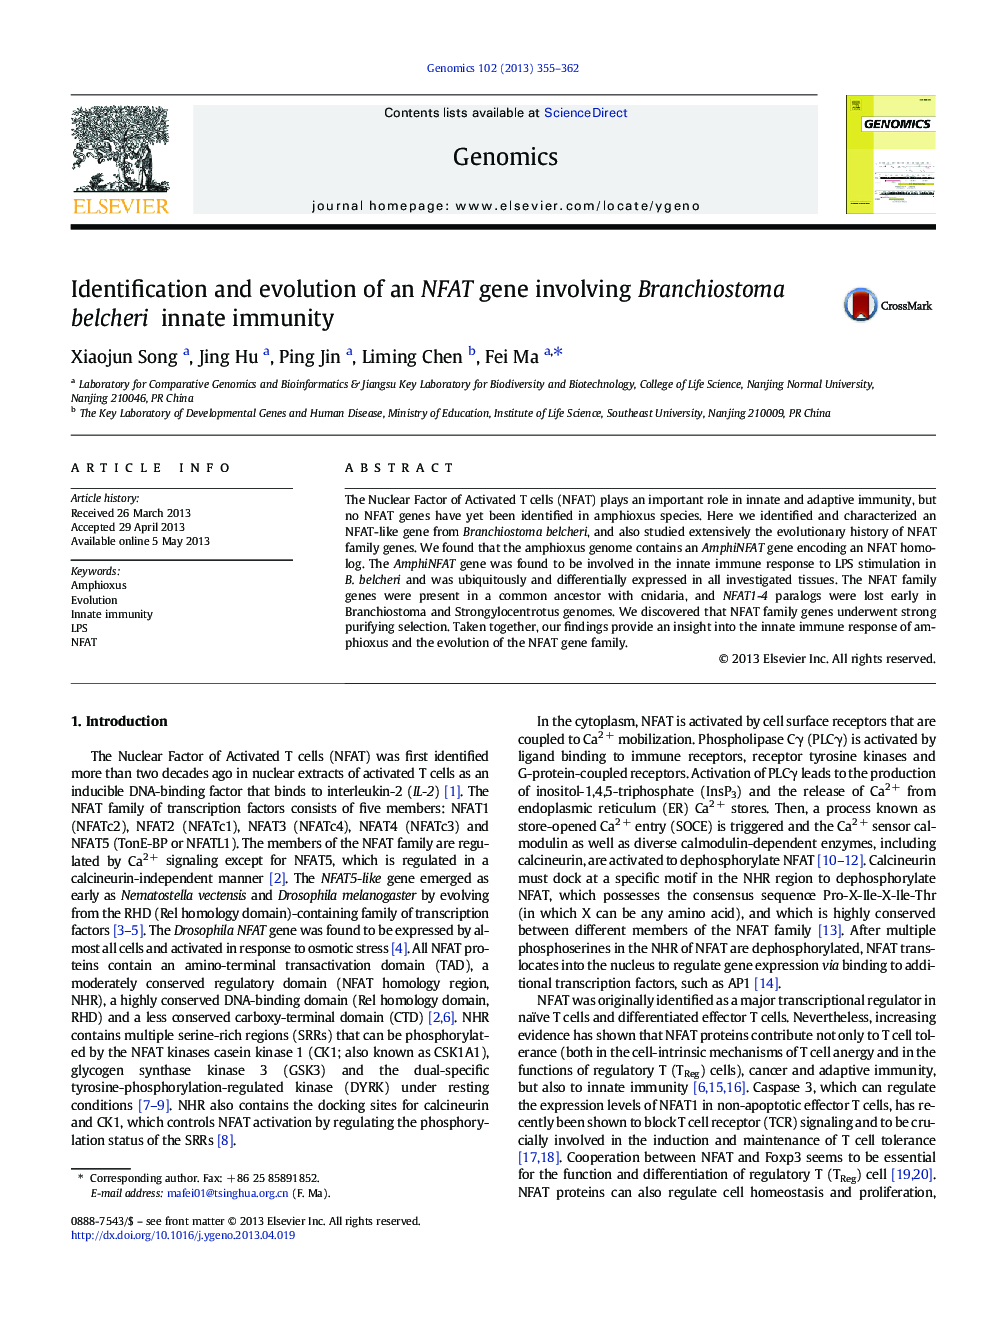 Identification and evolution of an NFAT gene involving Branchiostoma belcheri innate immunity